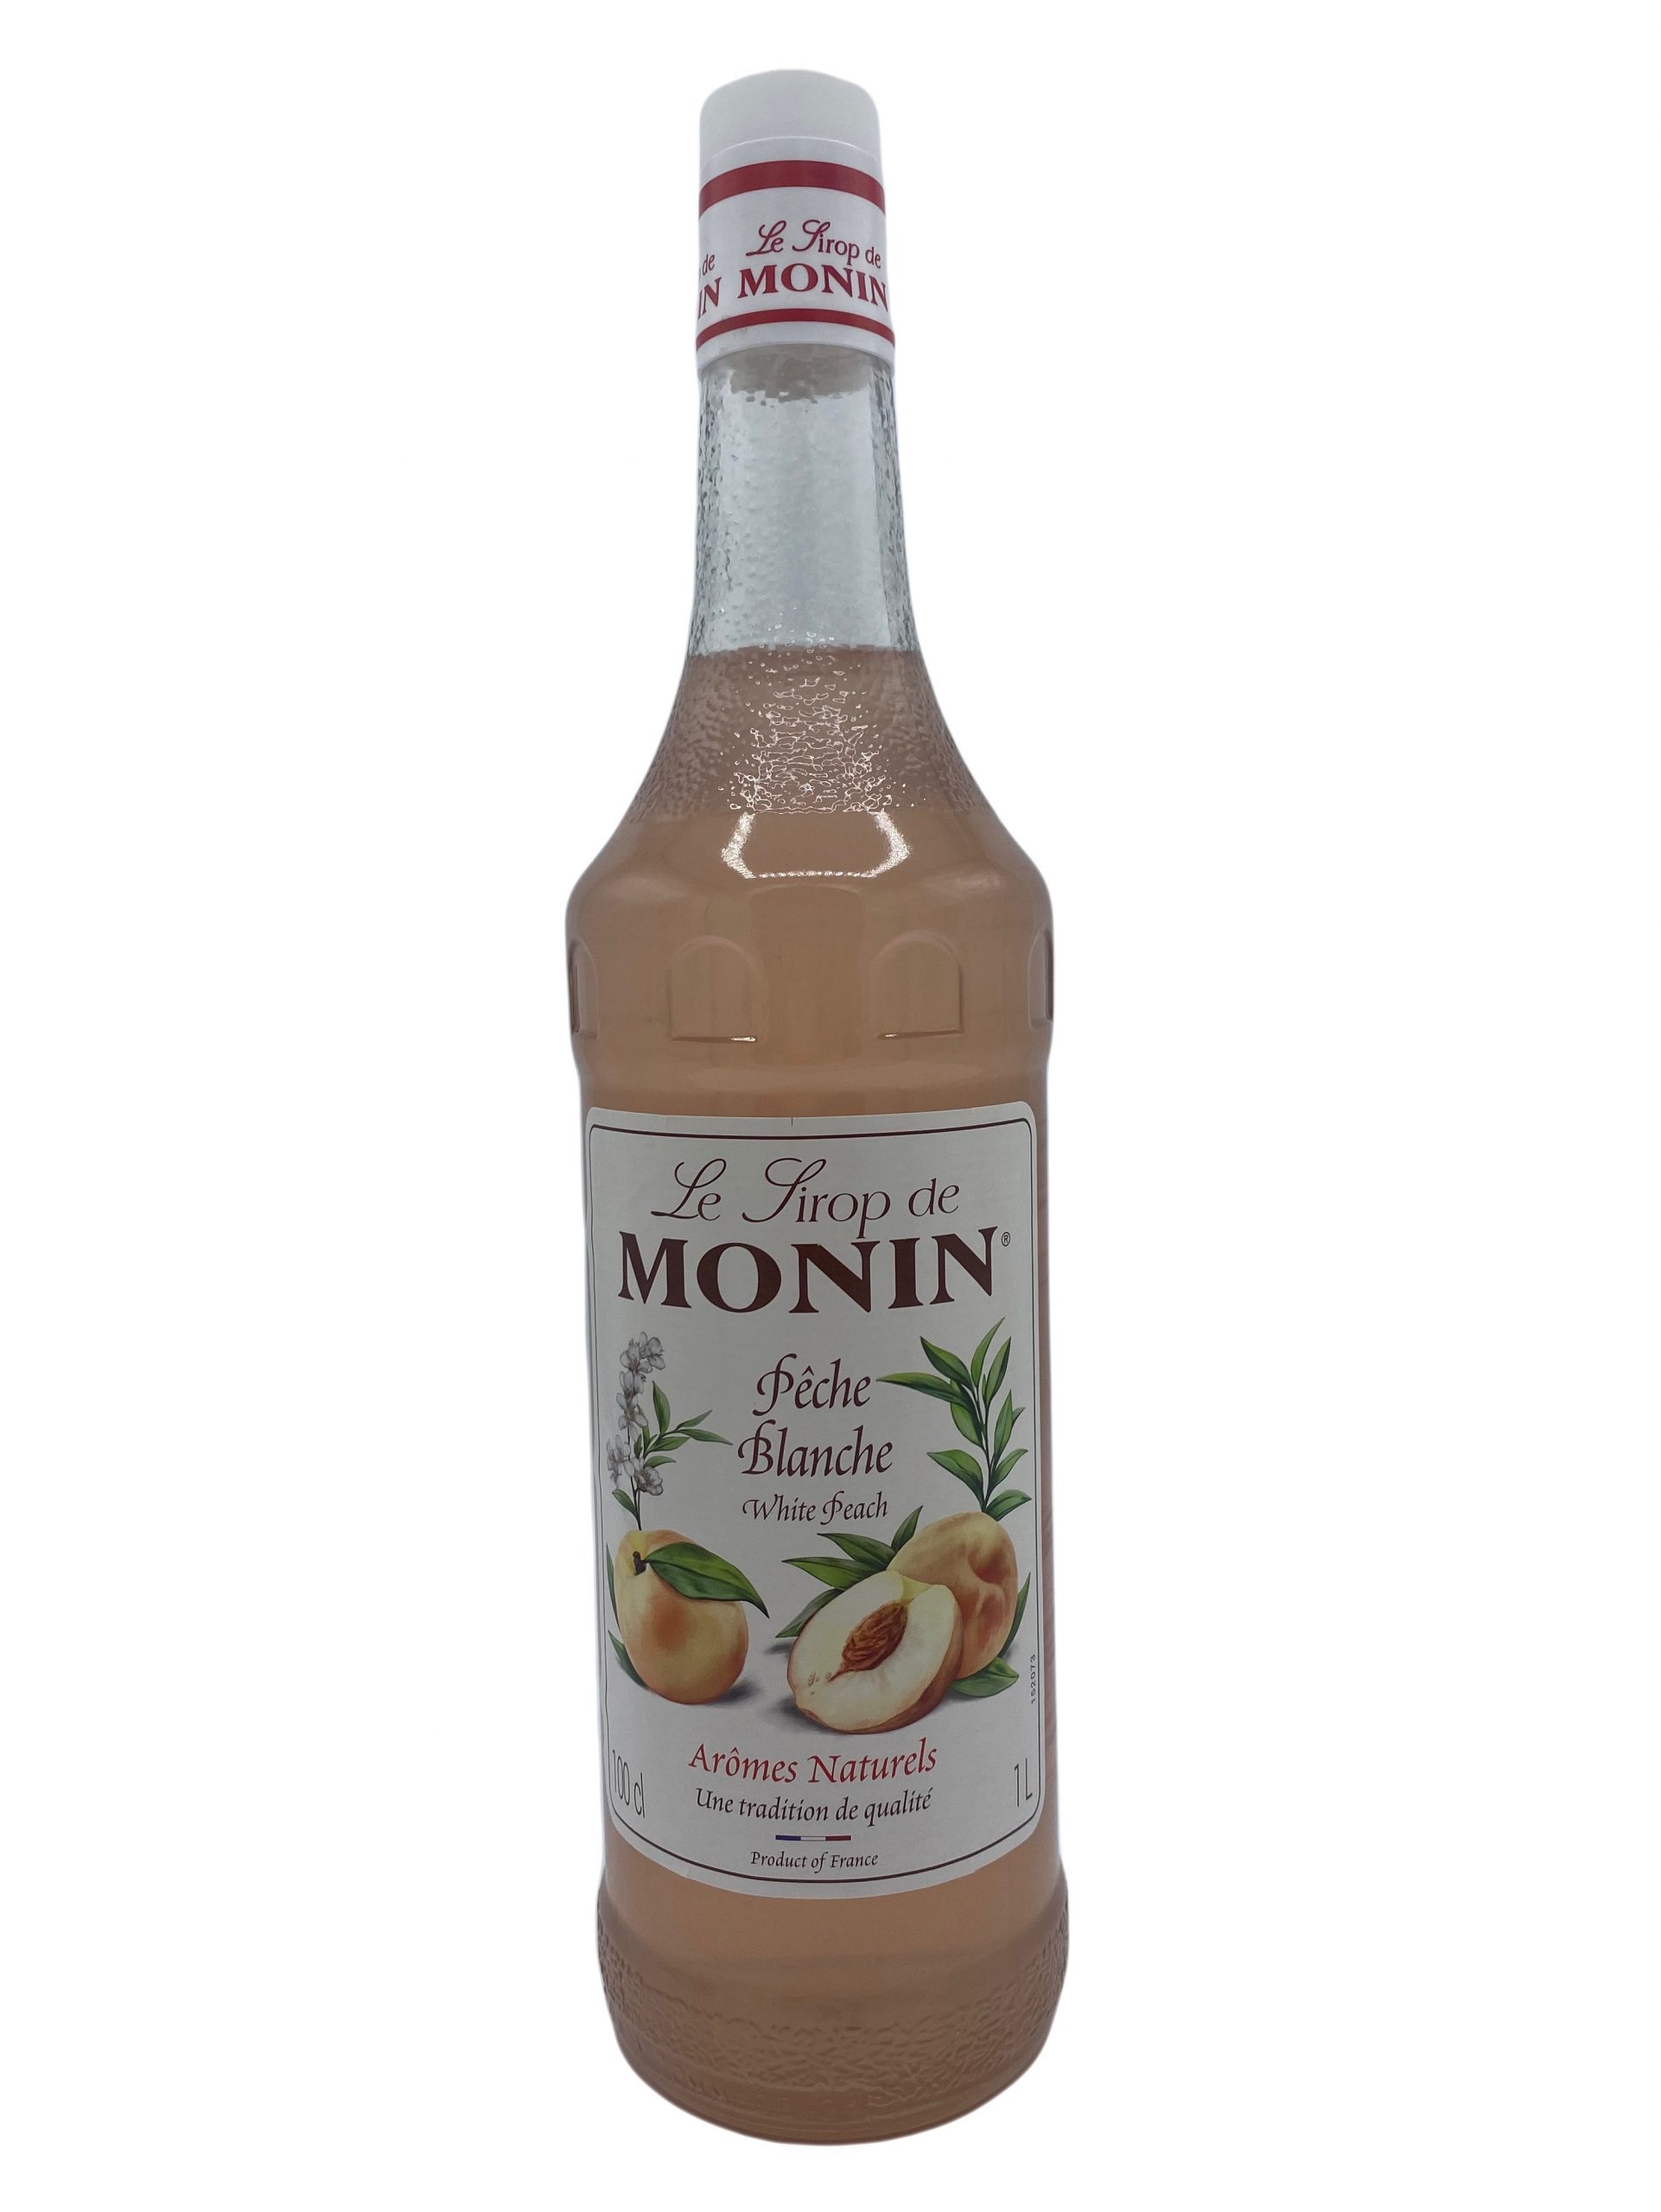 Where to buy Monin Sirop Vanille -Vanilla Syrup, France